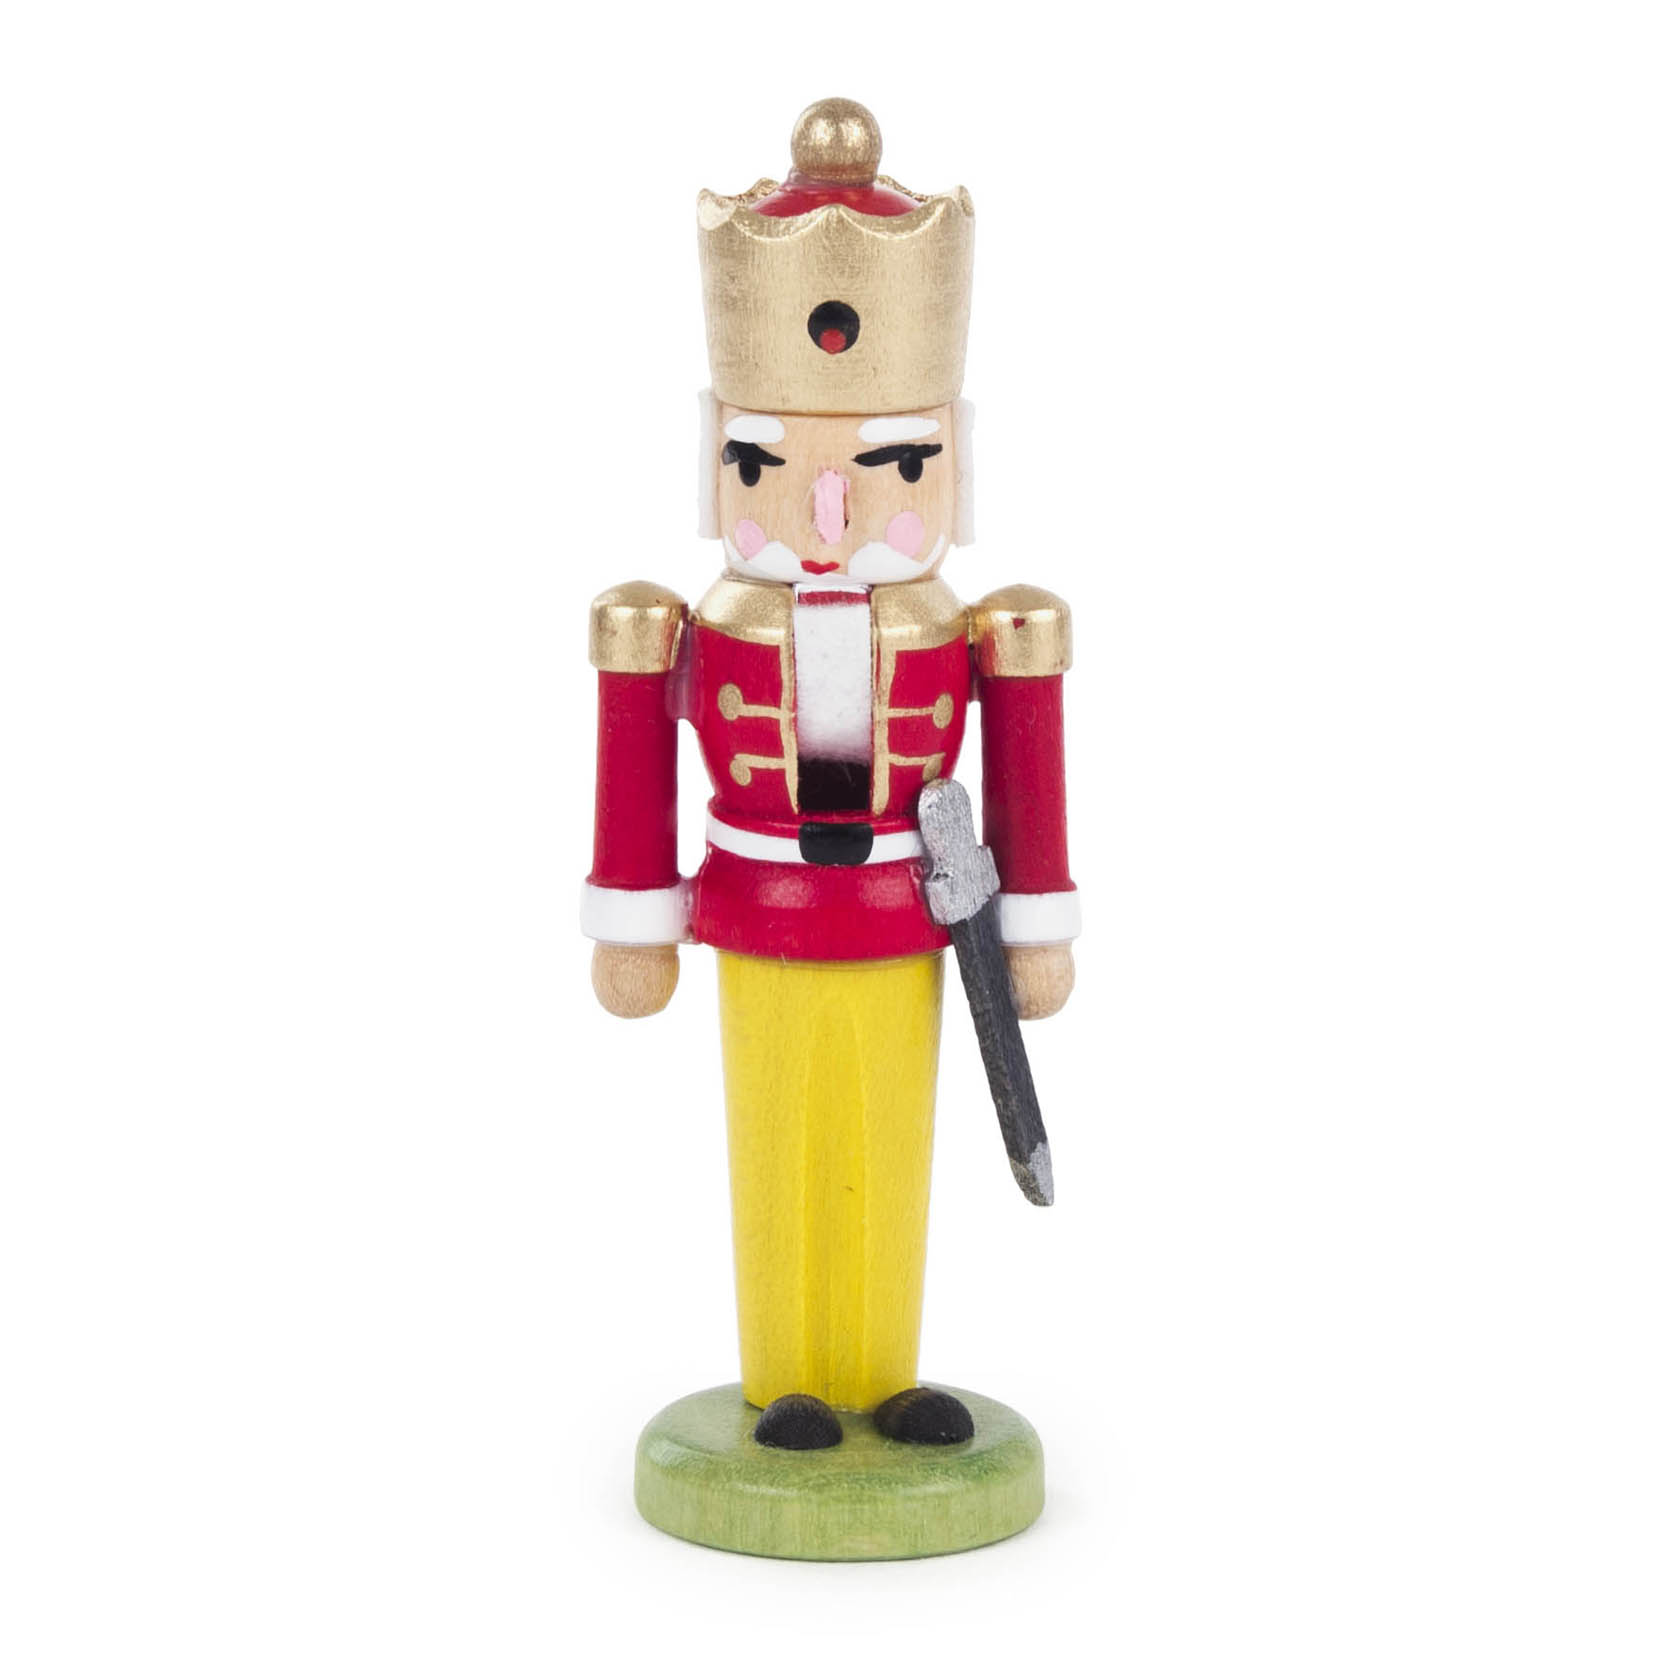 Mini-Nussknacker König rot-gelb, 7,5cm im Dregeno Online Shop günstig kaufen